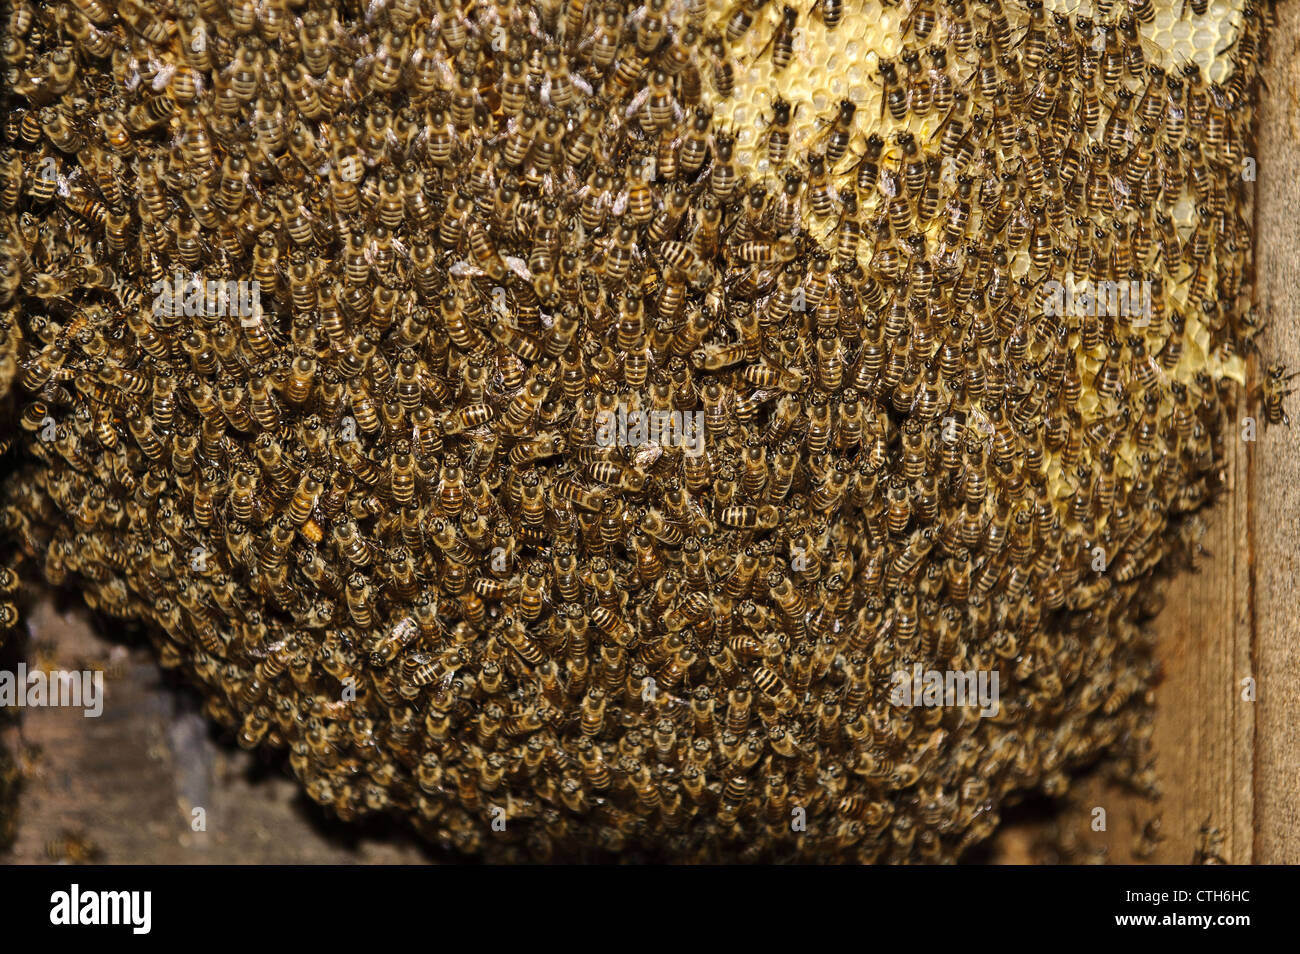 The inside of a hive at the farm of beekeeper Masahiro Tominaga, Inadani, Nagano Prefecture, Japan Stock Photo